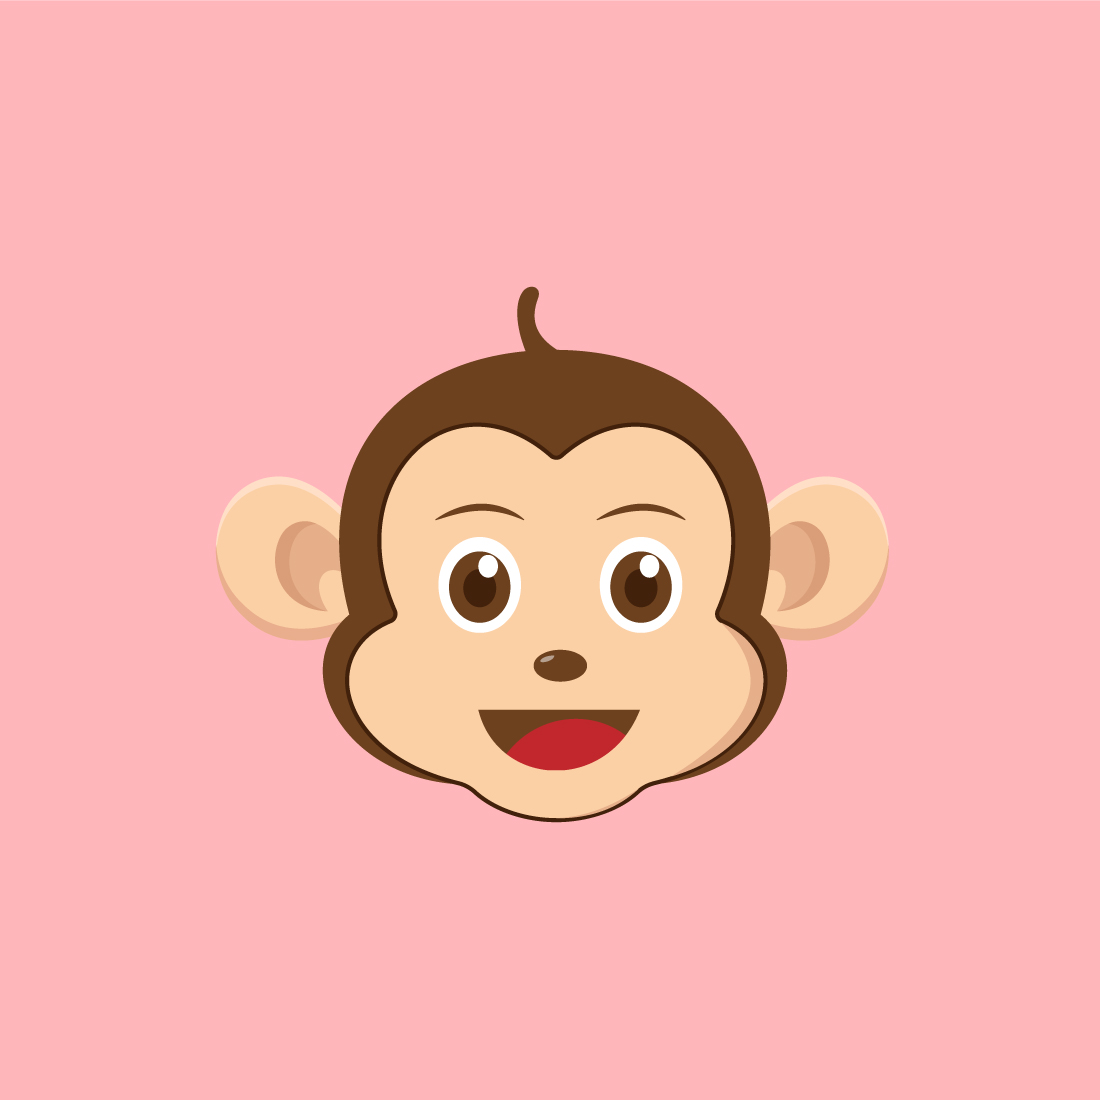 7 cute monkey faces 03